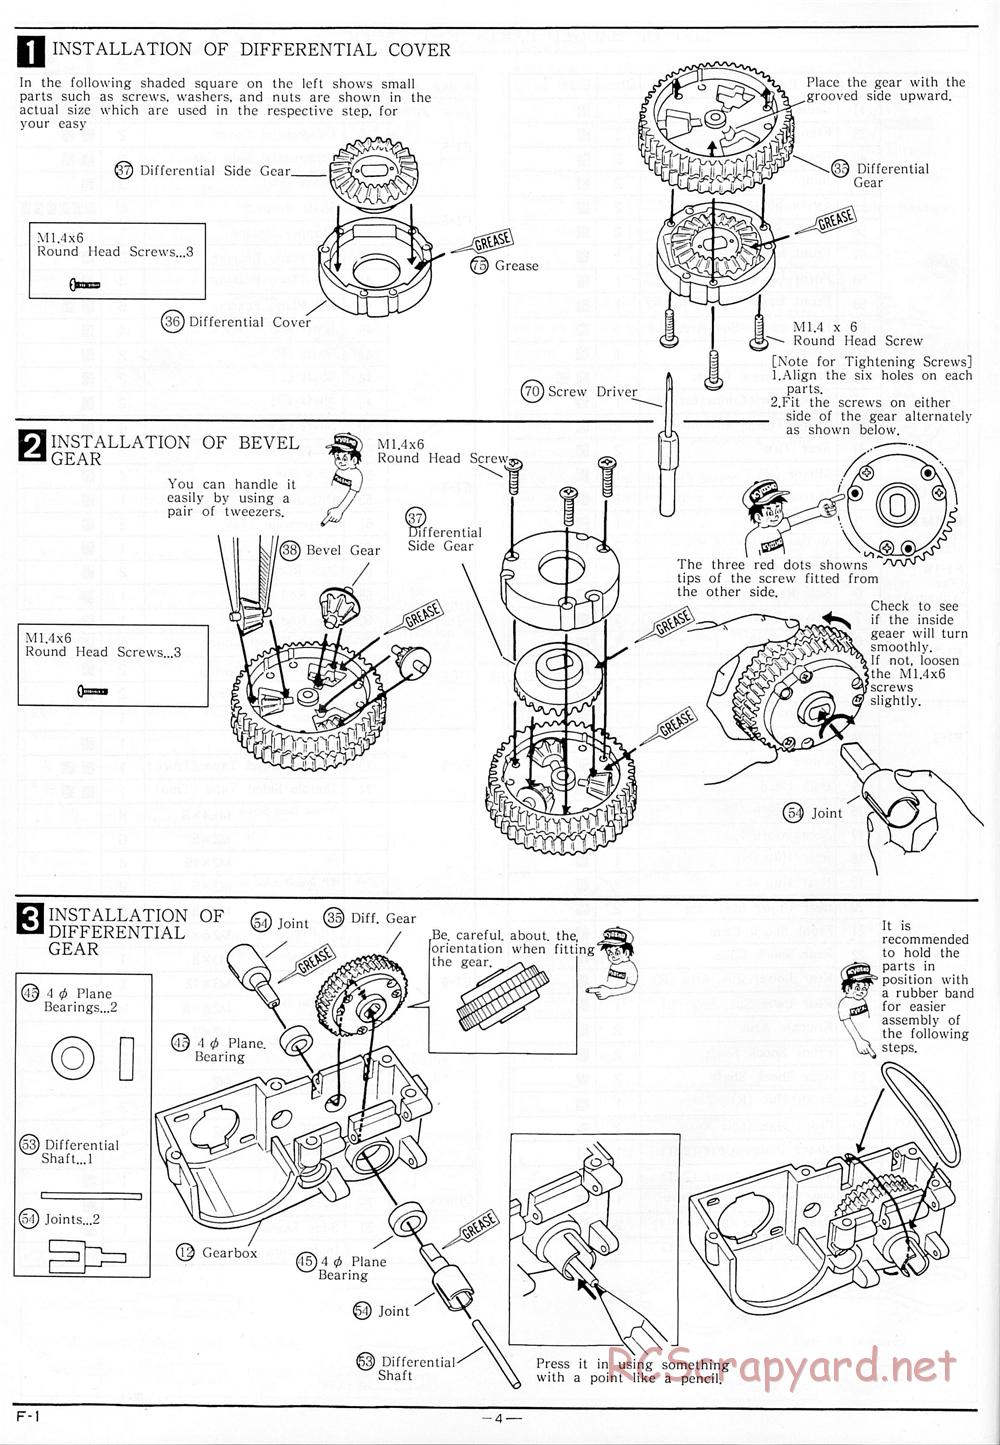 Kyosho - 1/18 Scale Formula One (F1) - Manual - Page 4